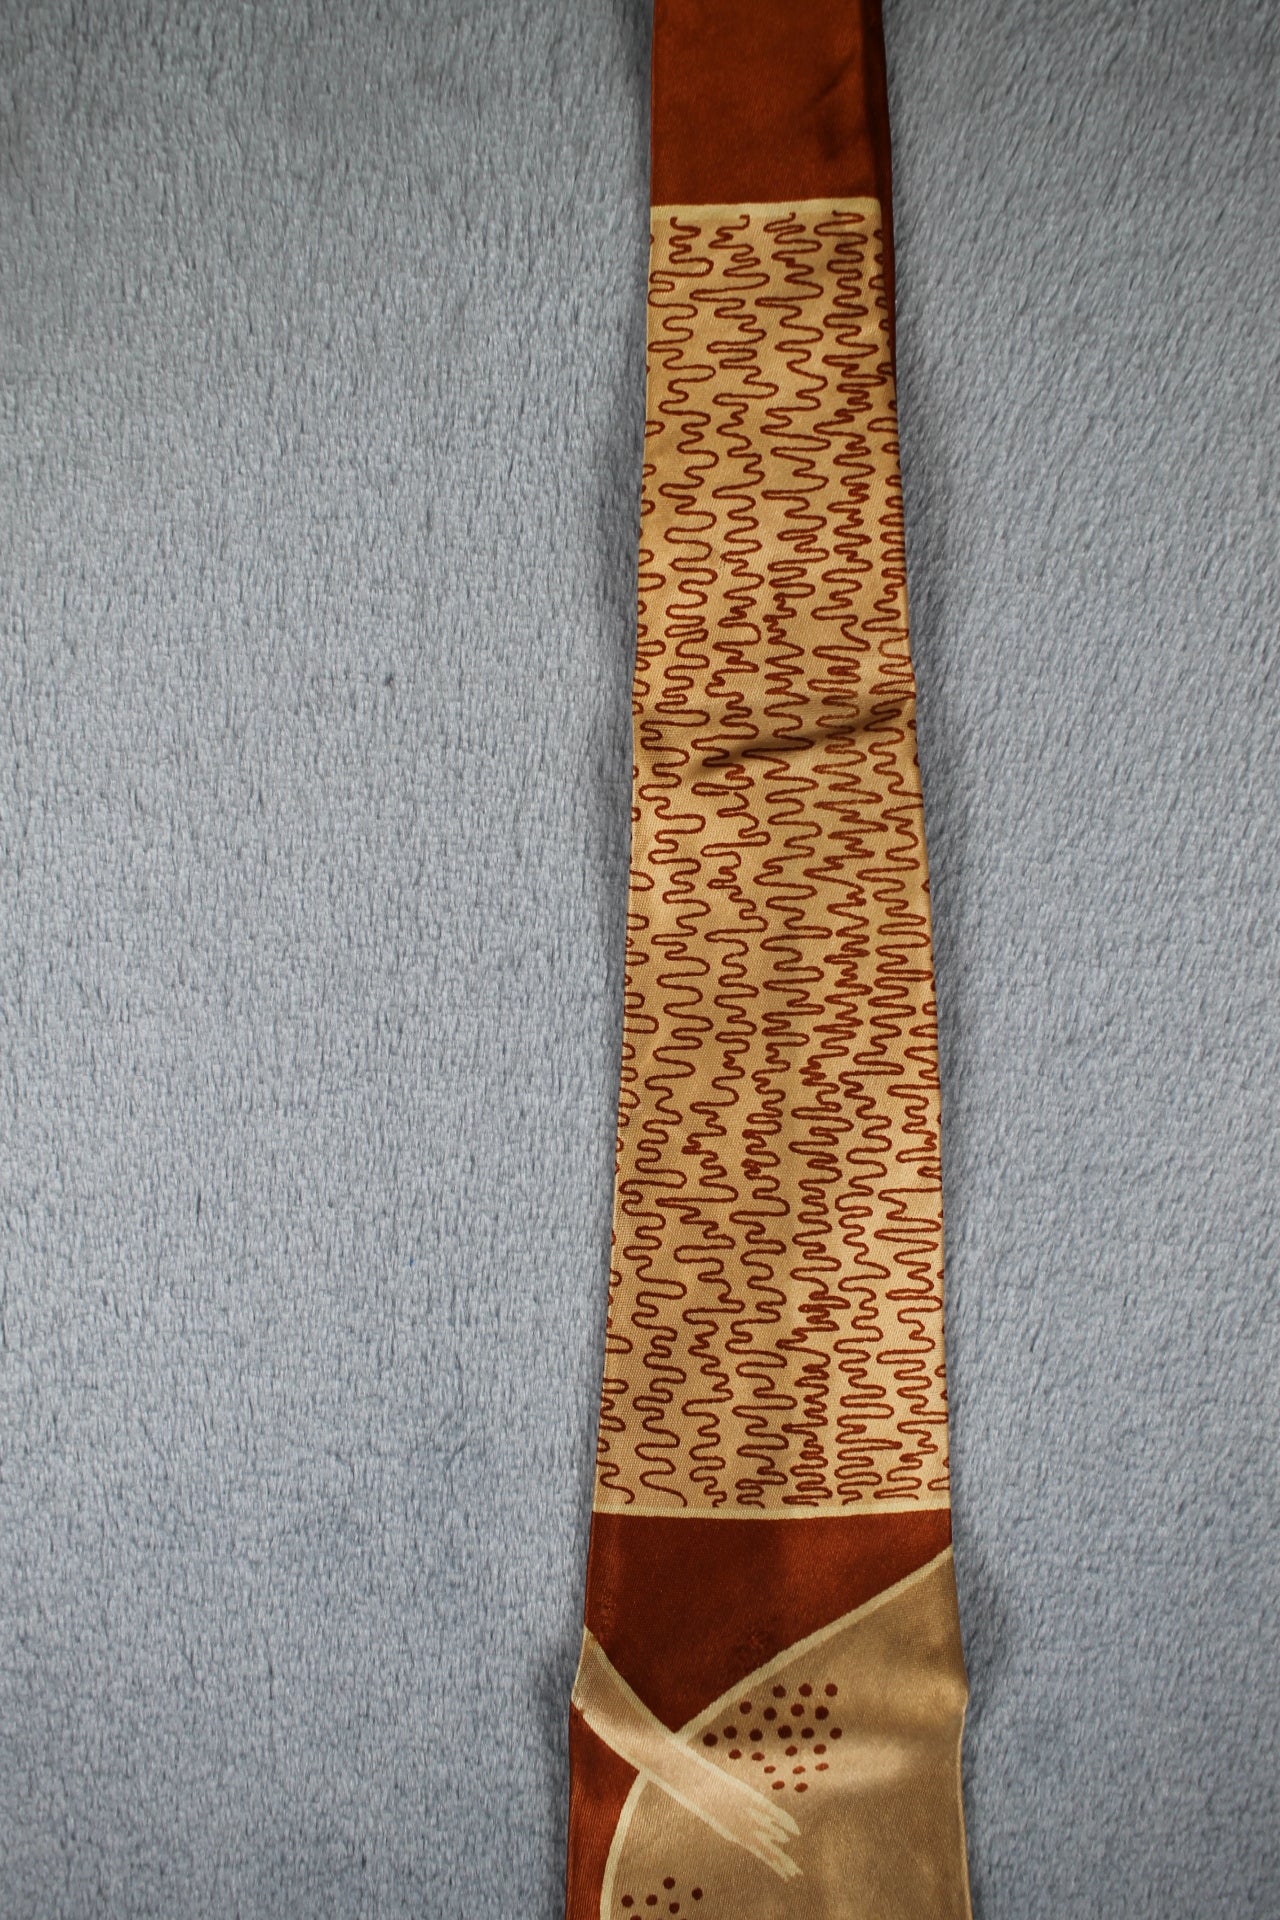 Vintage Hy Value Cravats 1940s/50s gold copper pattern swing tie